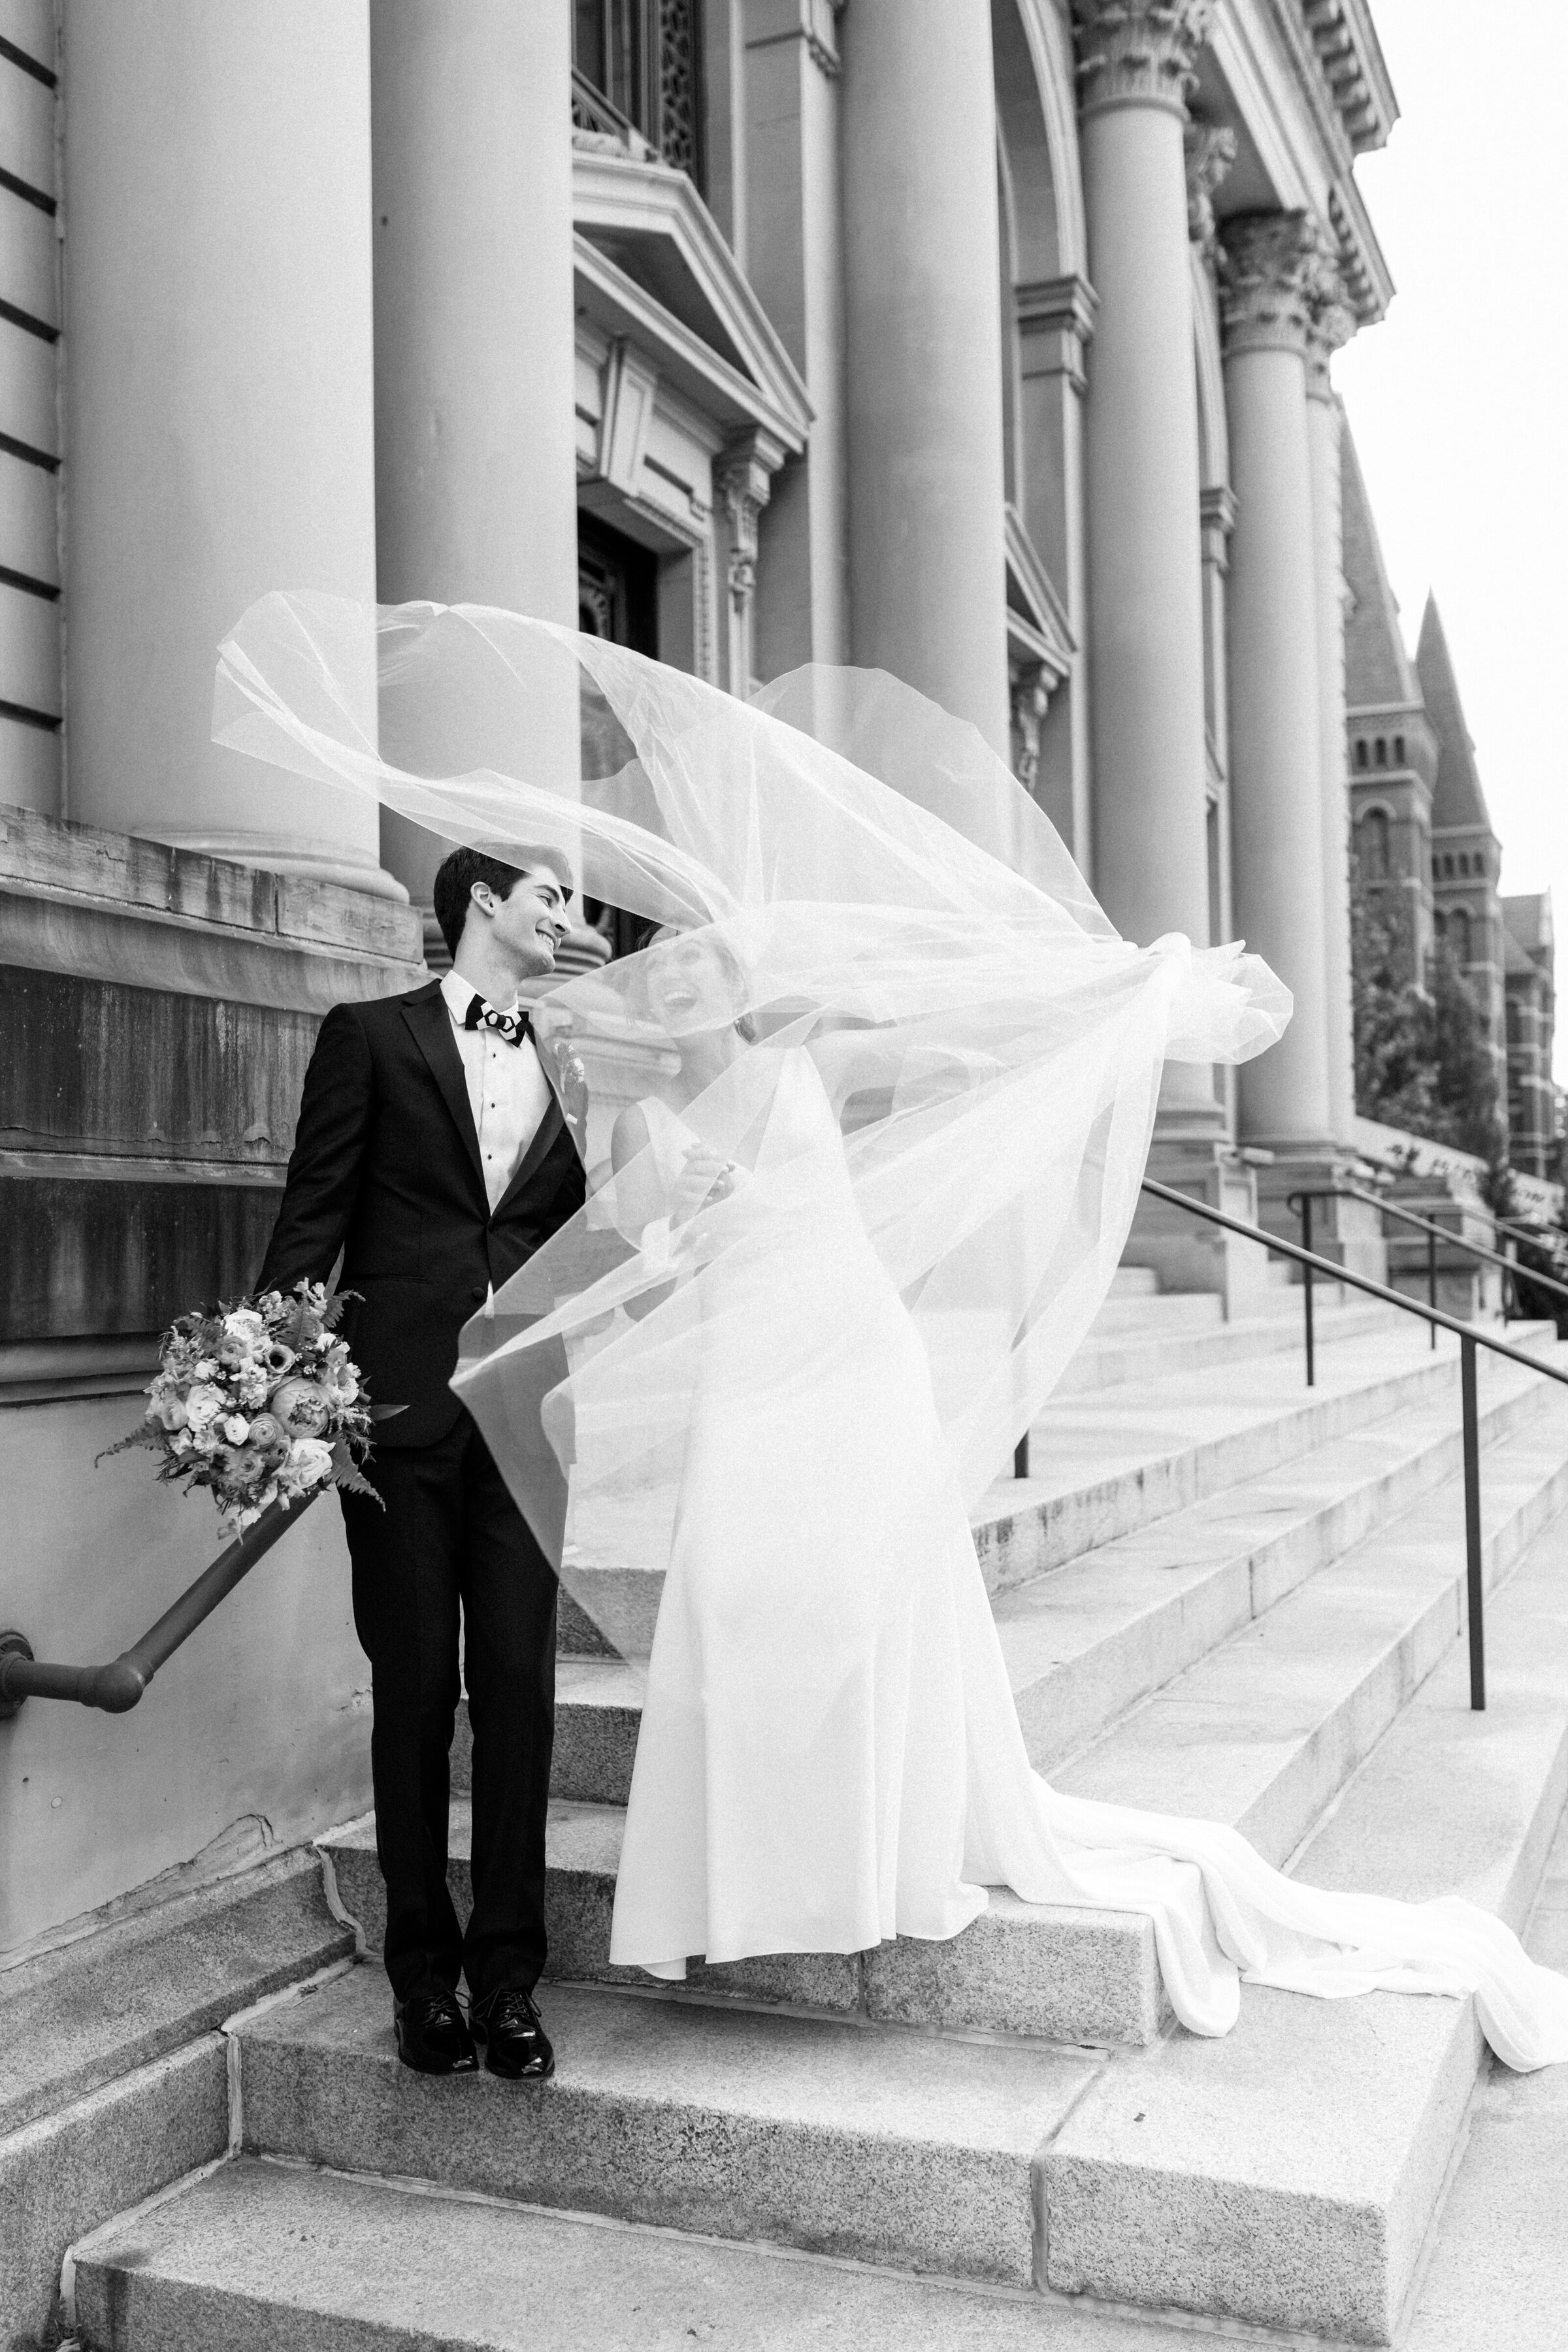 A bride's veil blows in the wind walking down Memorial Hall stairs downtown Cincinnati.